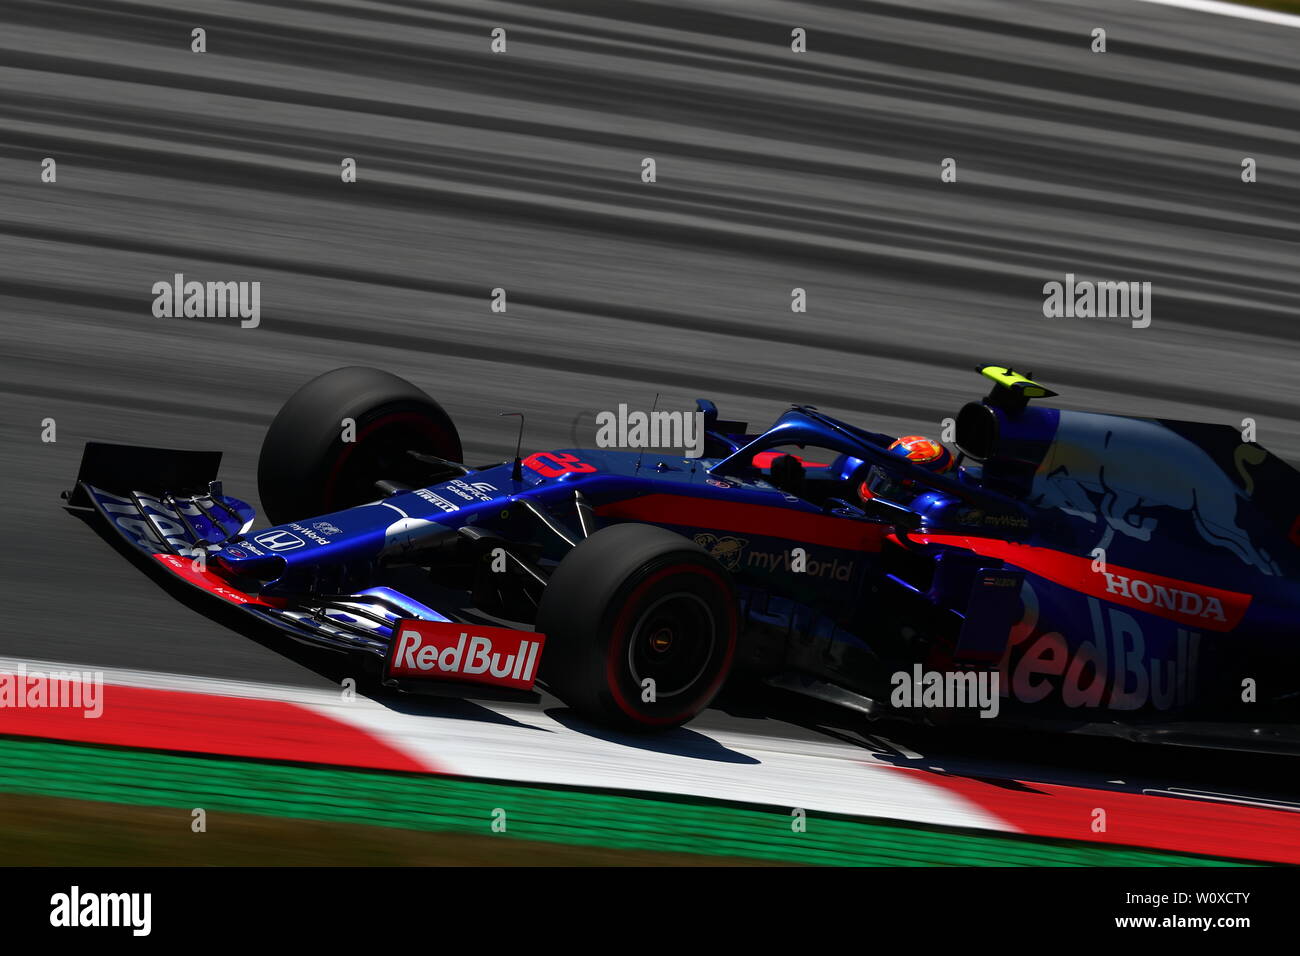 #23 Alexander Albon ToroRosso Honda. Austrian Grand Prix 2019 Spielberg. Stock Photo